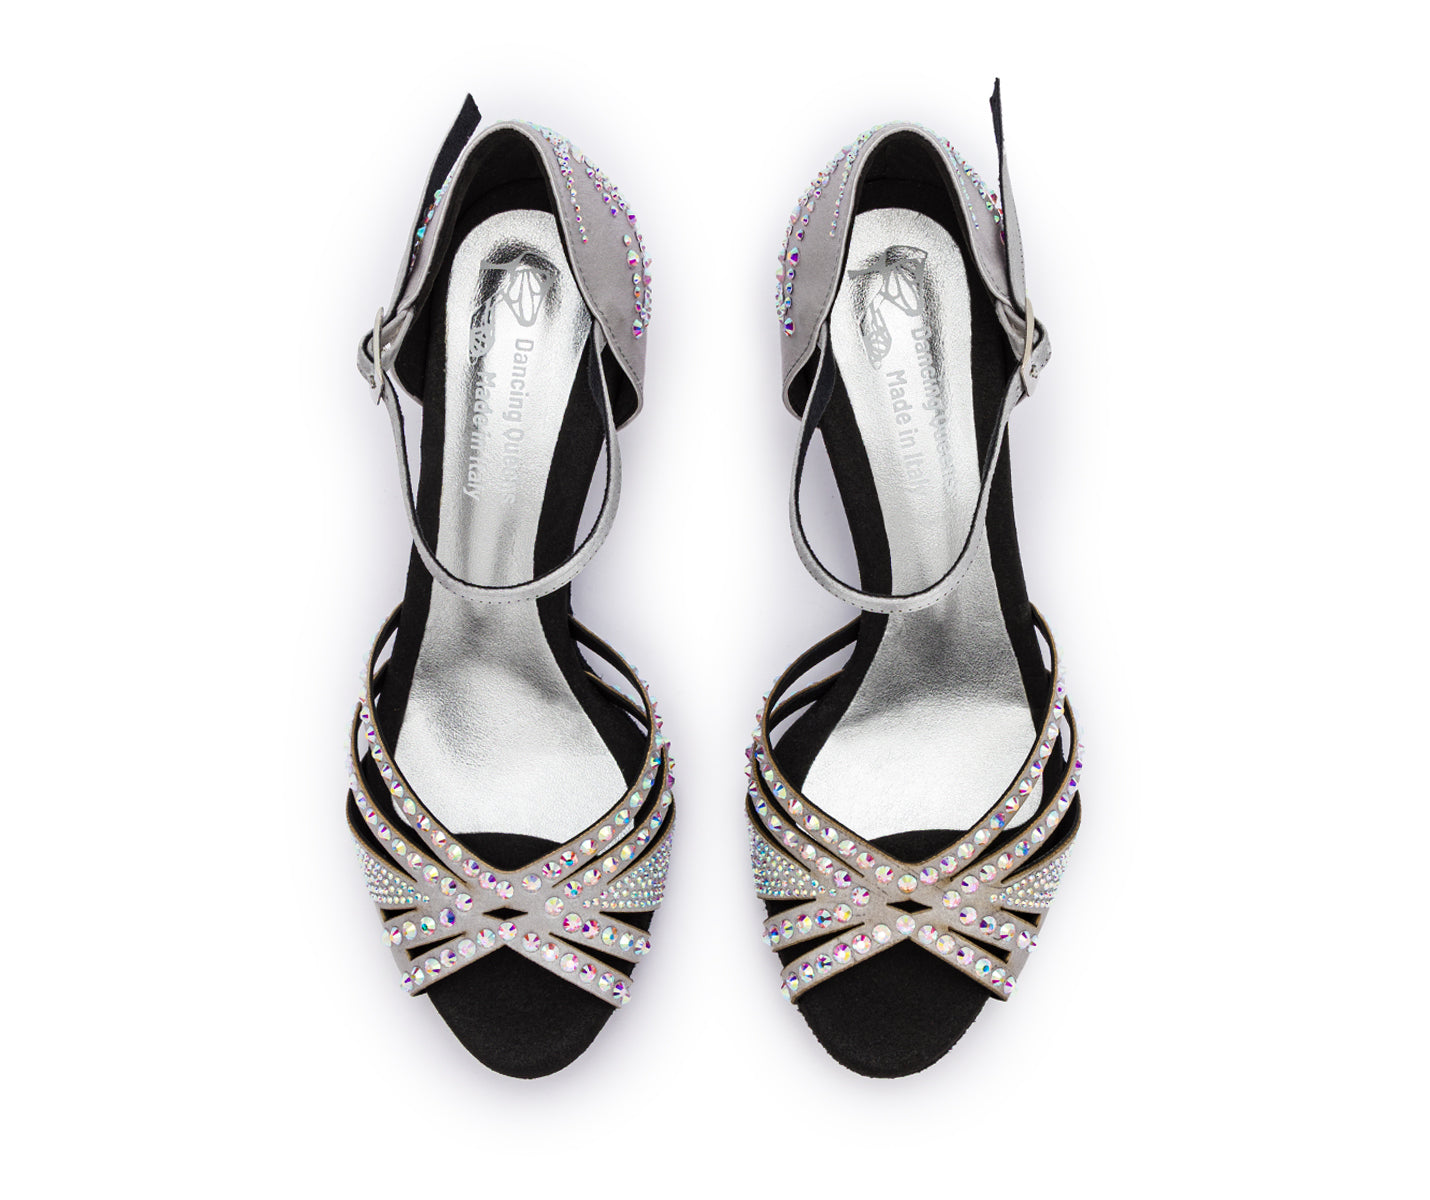 Zapatos de baile dq l3m en plata con diamantes de imitación